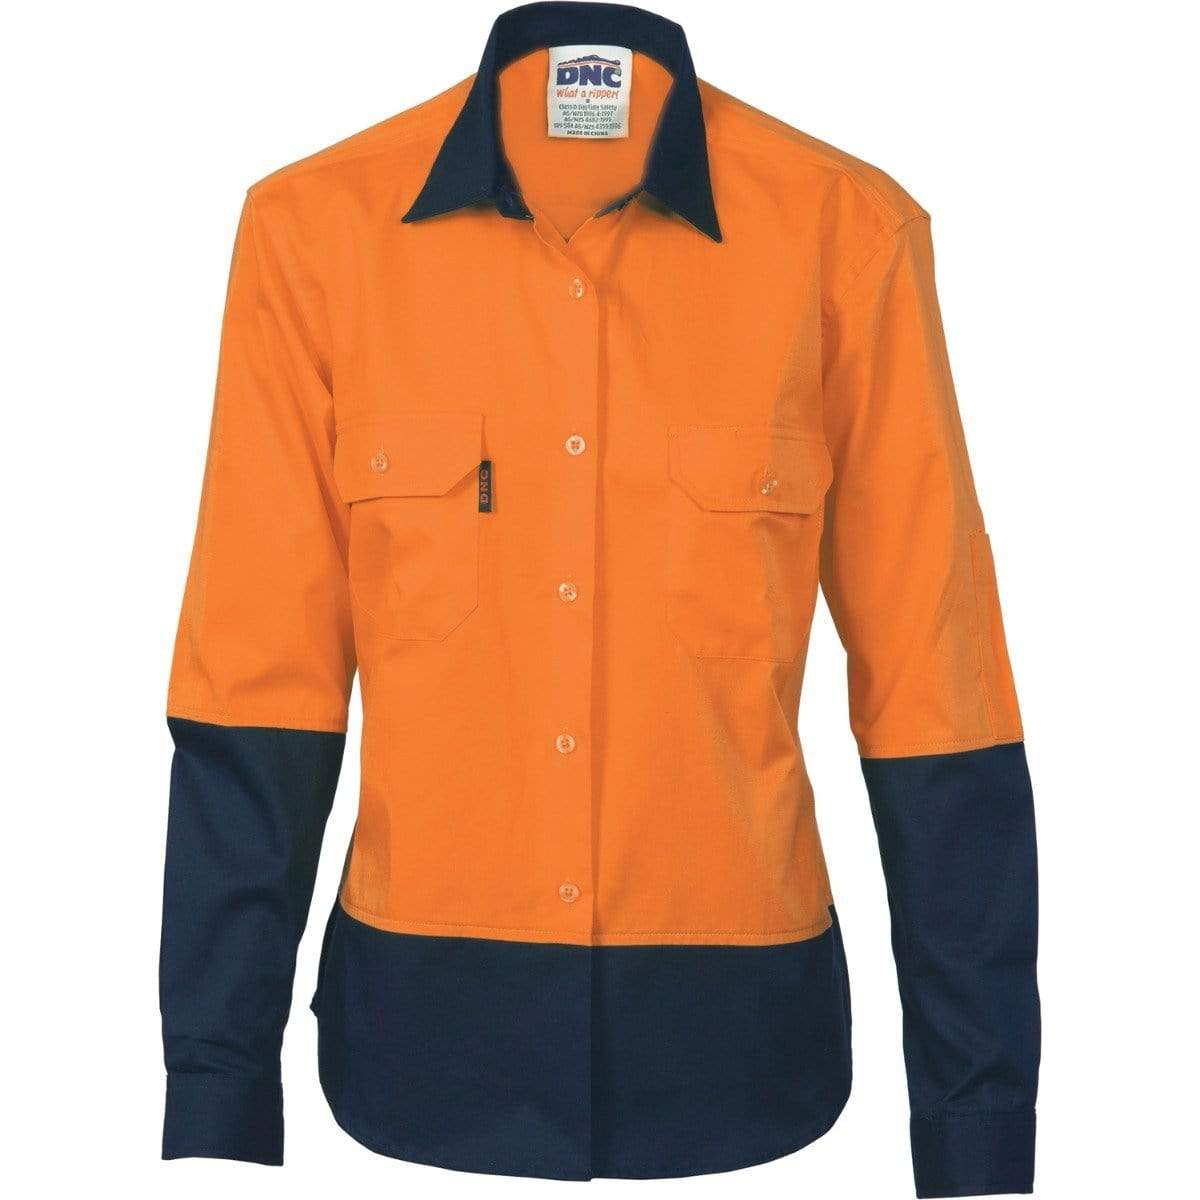 Dnc Workwear Women’s Hi-vis 2 Tone Cool-breeze Long Sleeve Cotton Shirt - 3940 Work Wear DNC Workwear Orange/Navy 8 